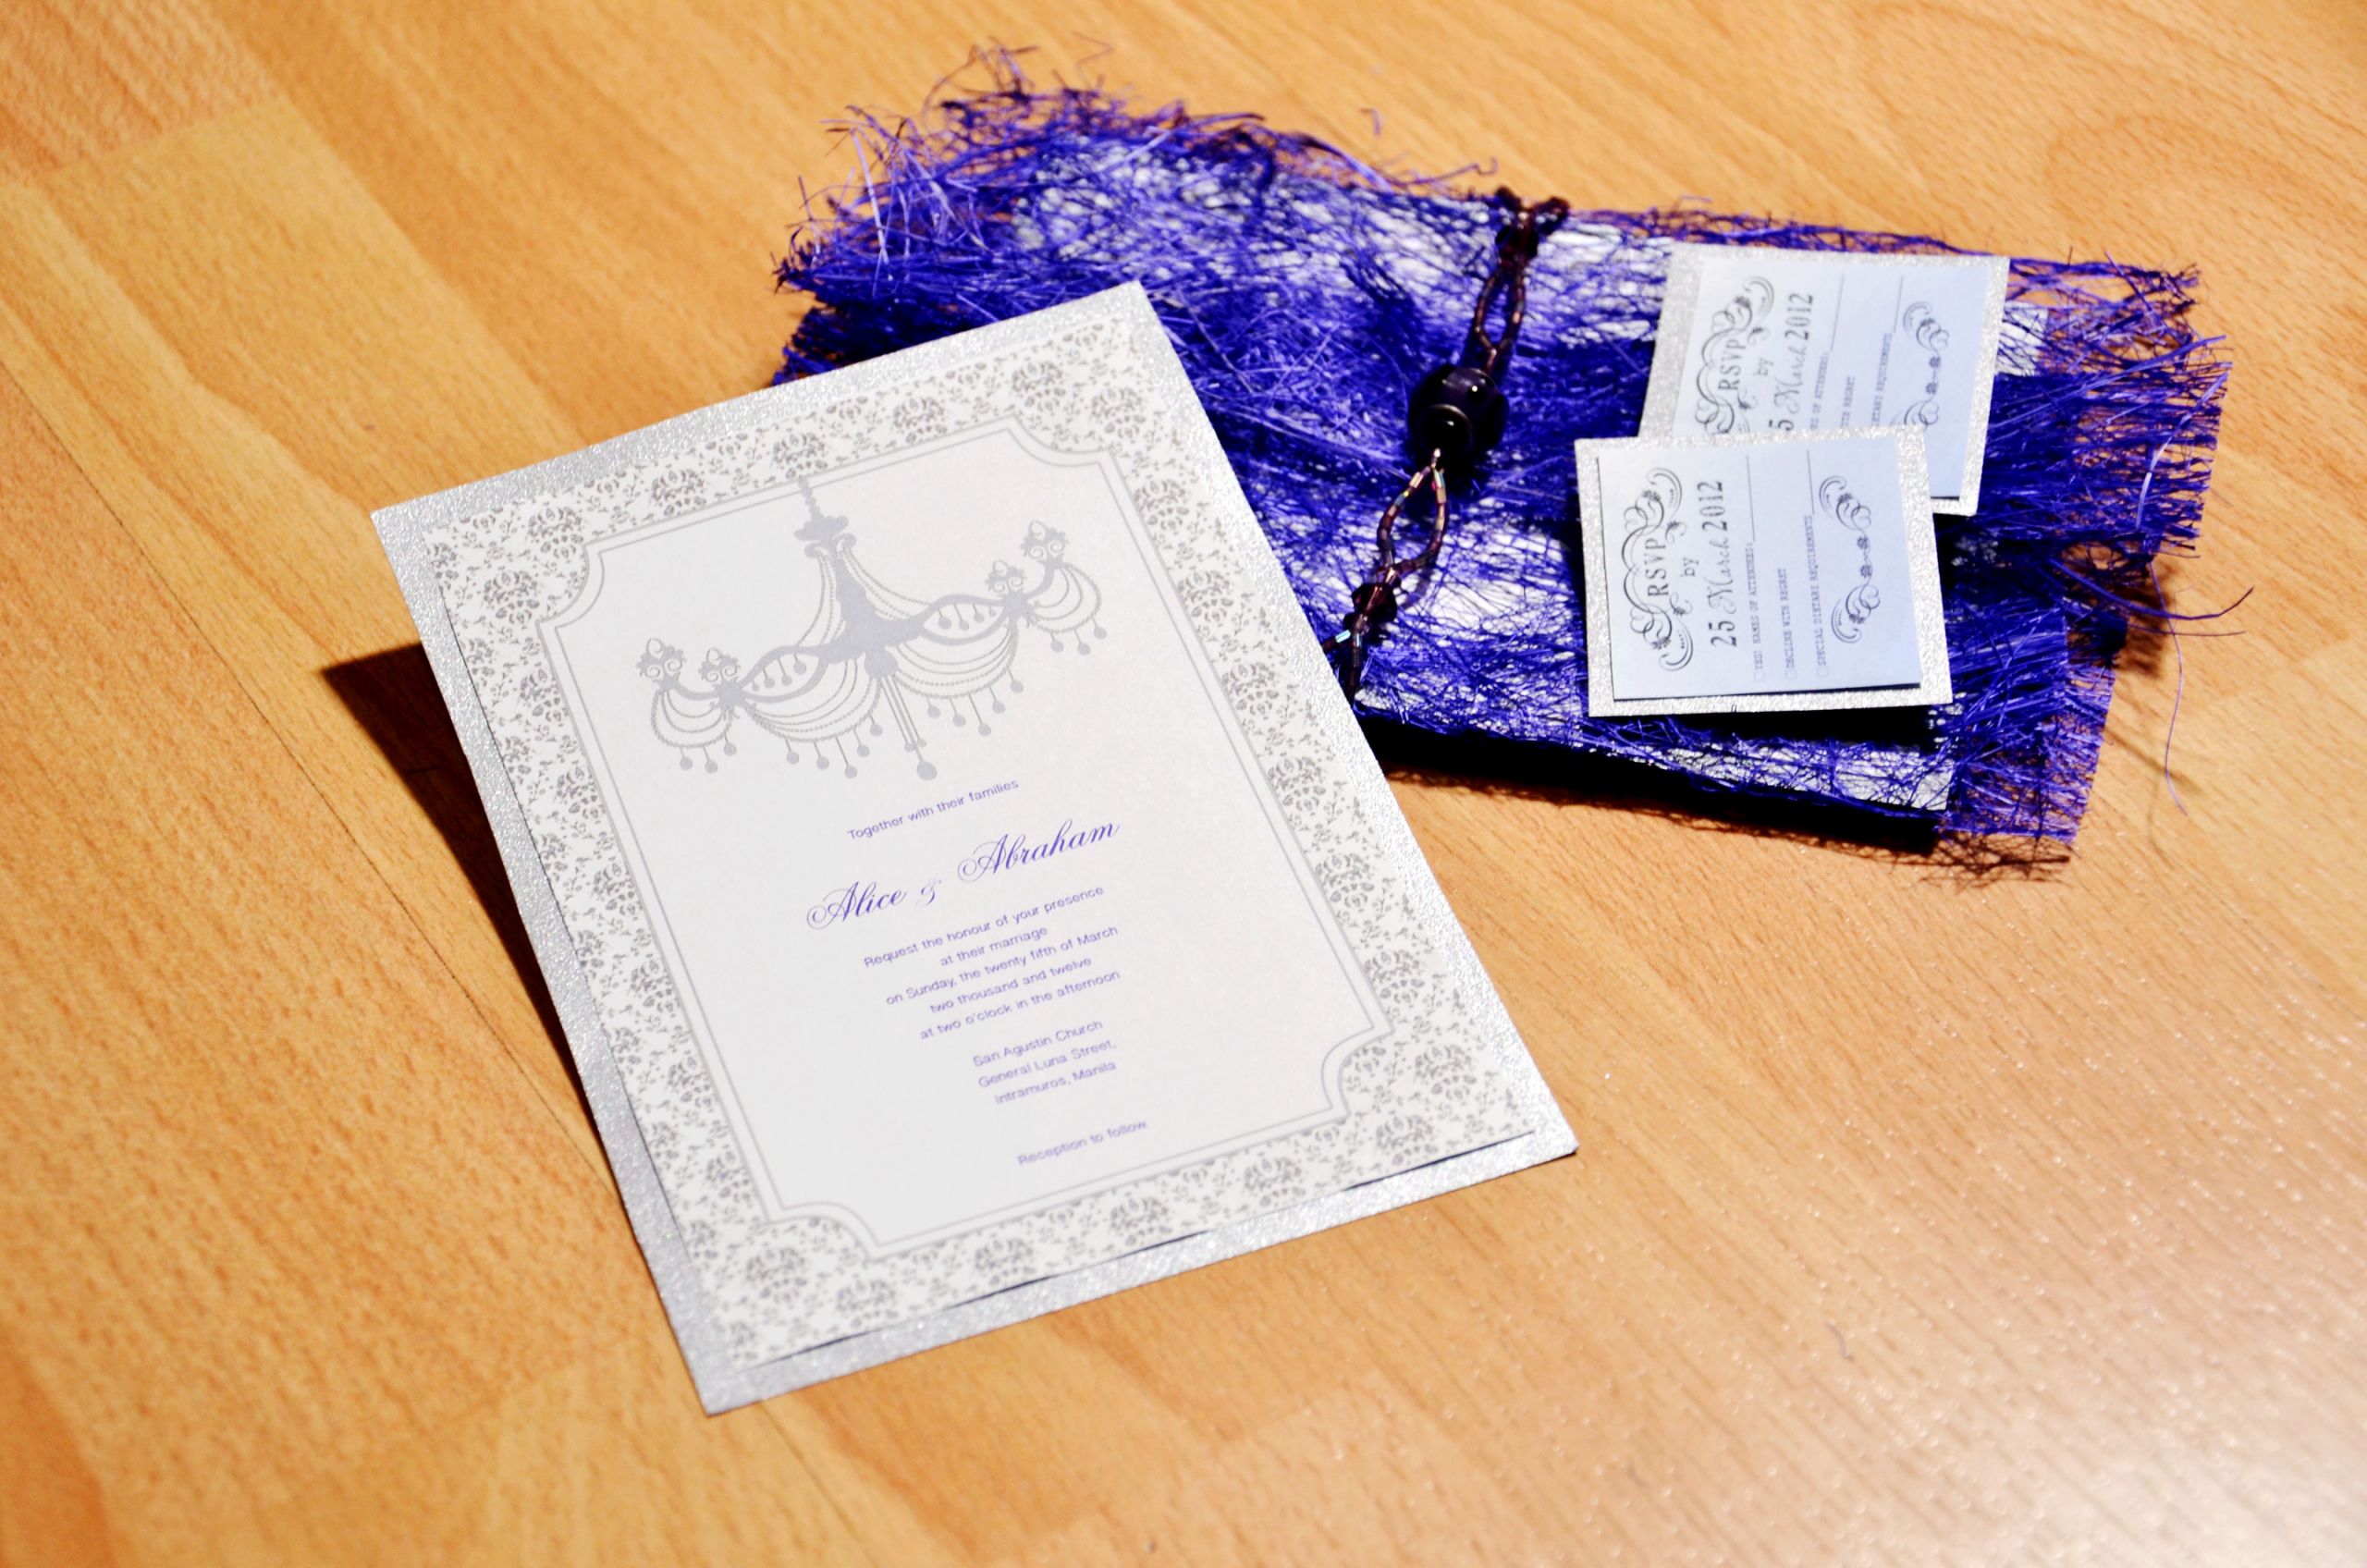 Homemade Wedding Invitations Ideas
 3 Ways to Make Cheap Homemade Wedding Invitations wikiHow